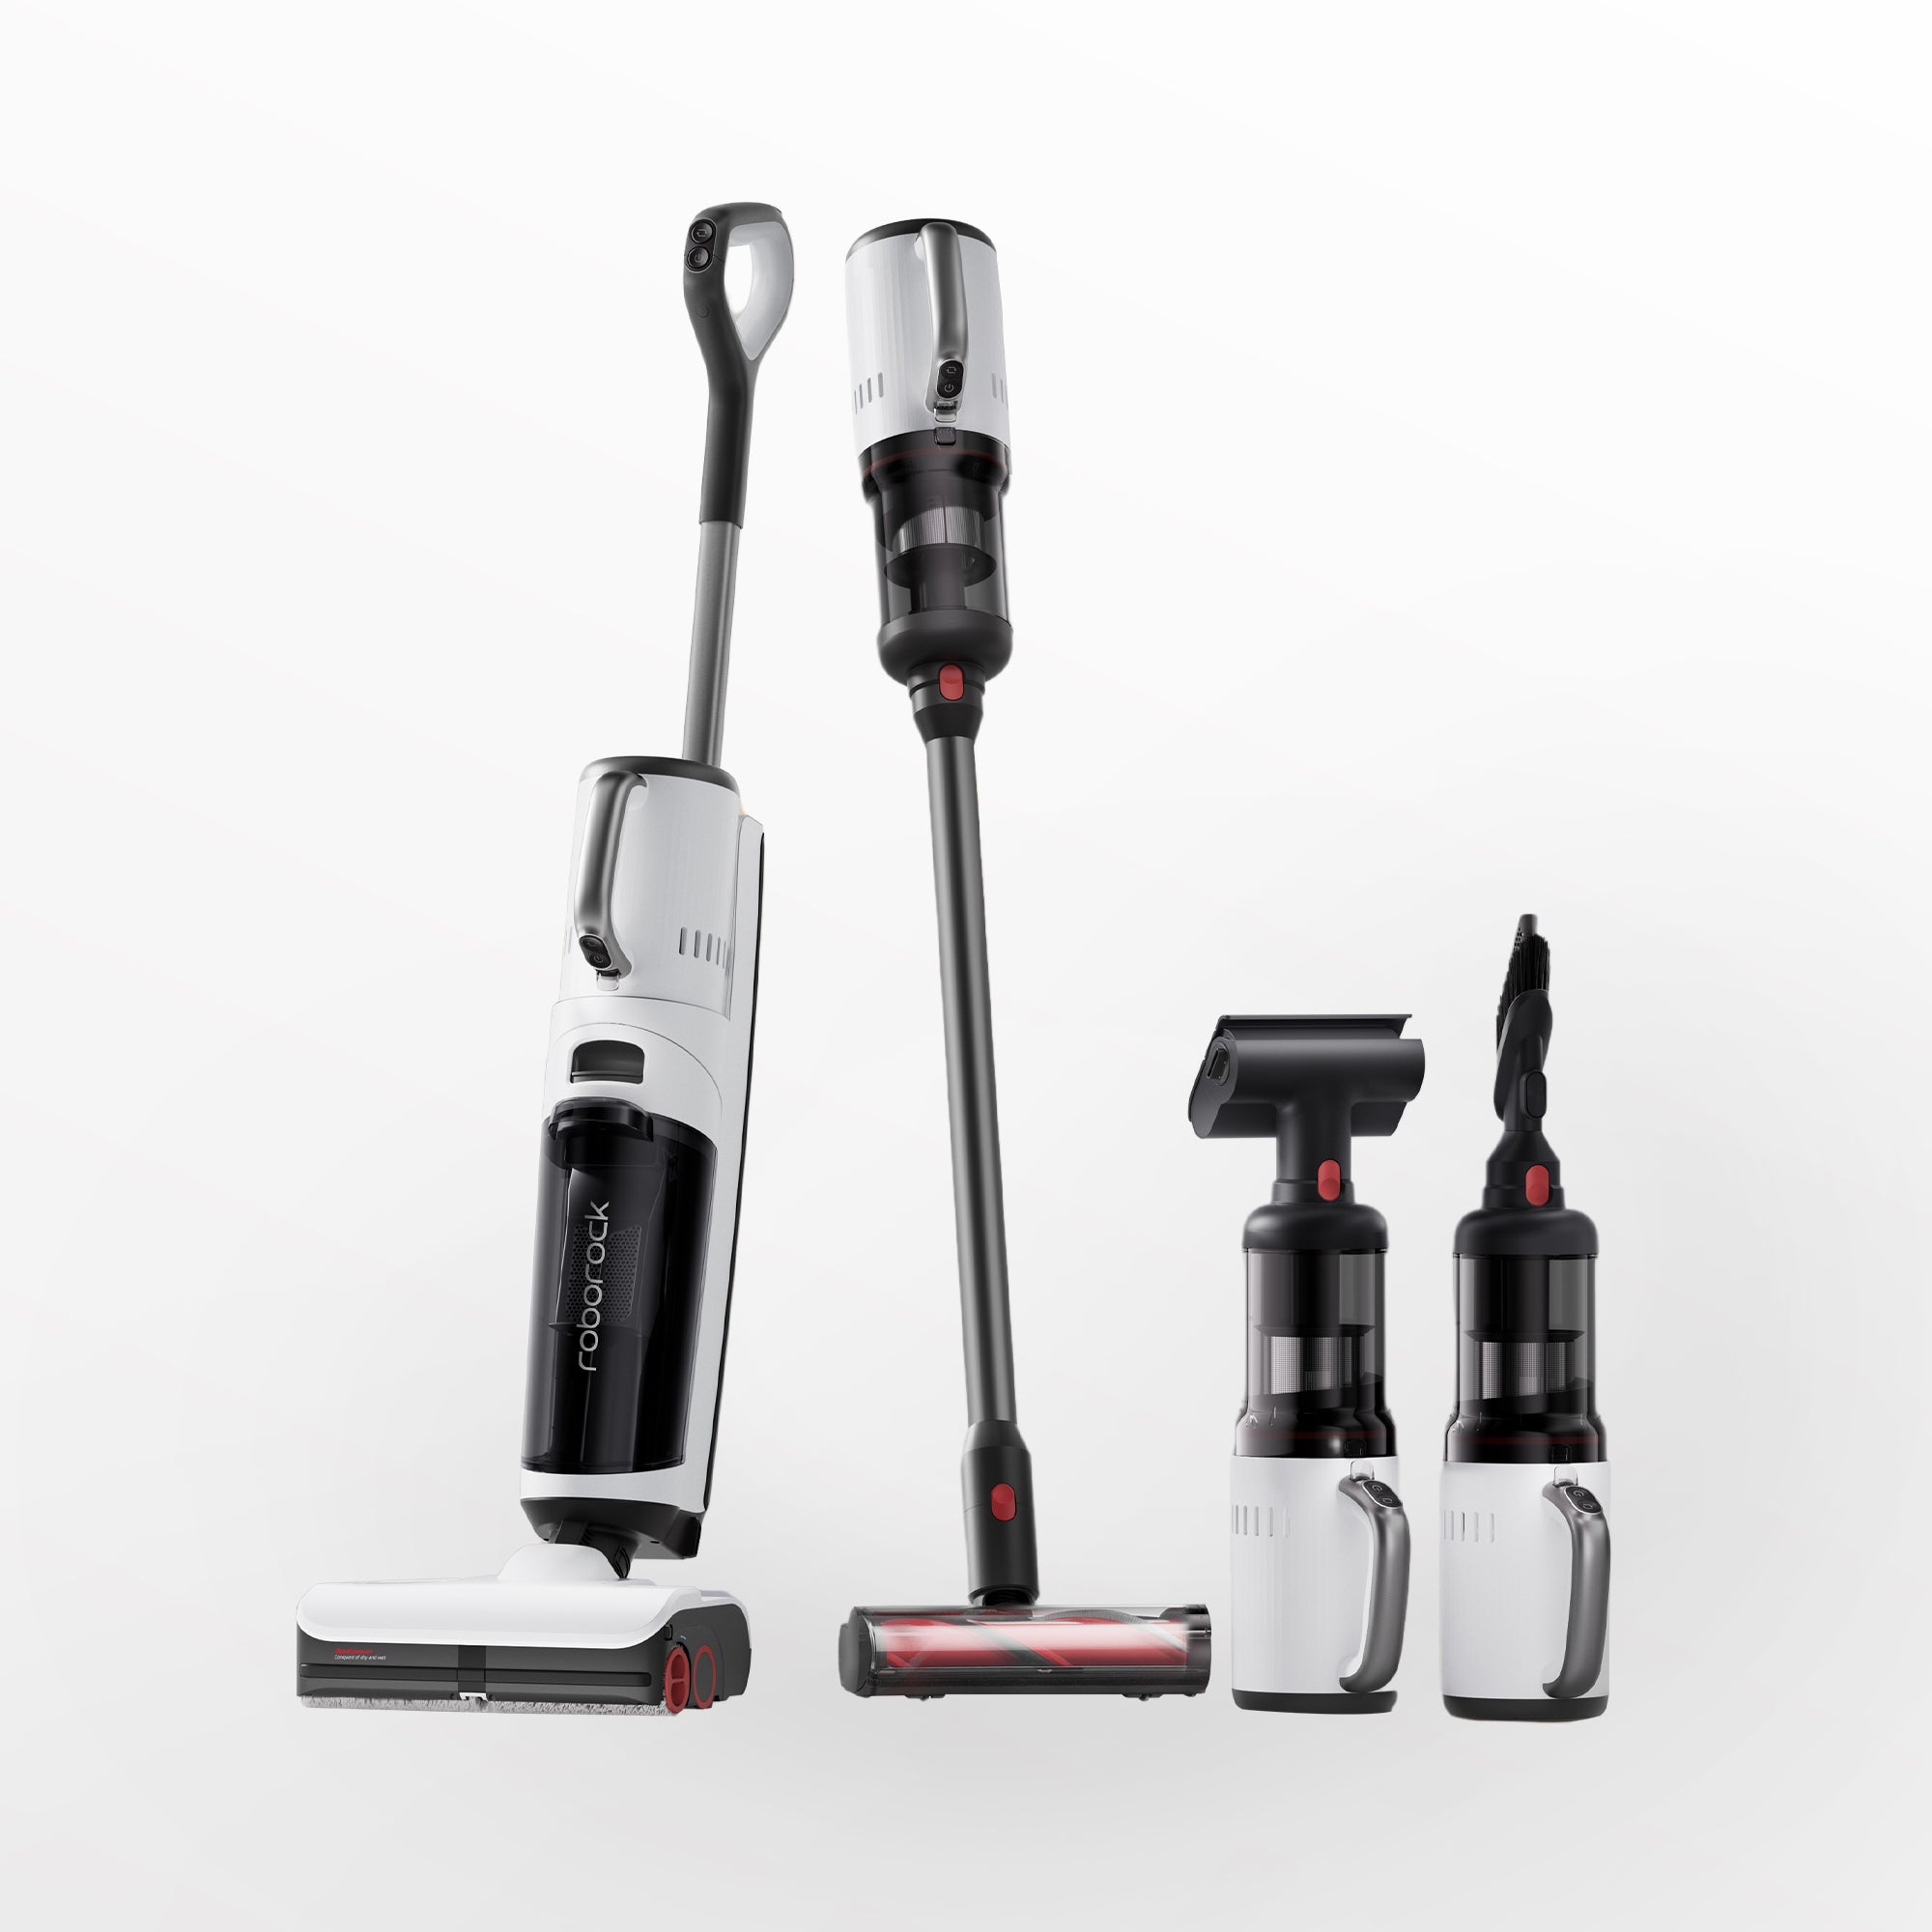 Roborock Store - Shop Robot Vacuums & Mops, Roborock US Official Site